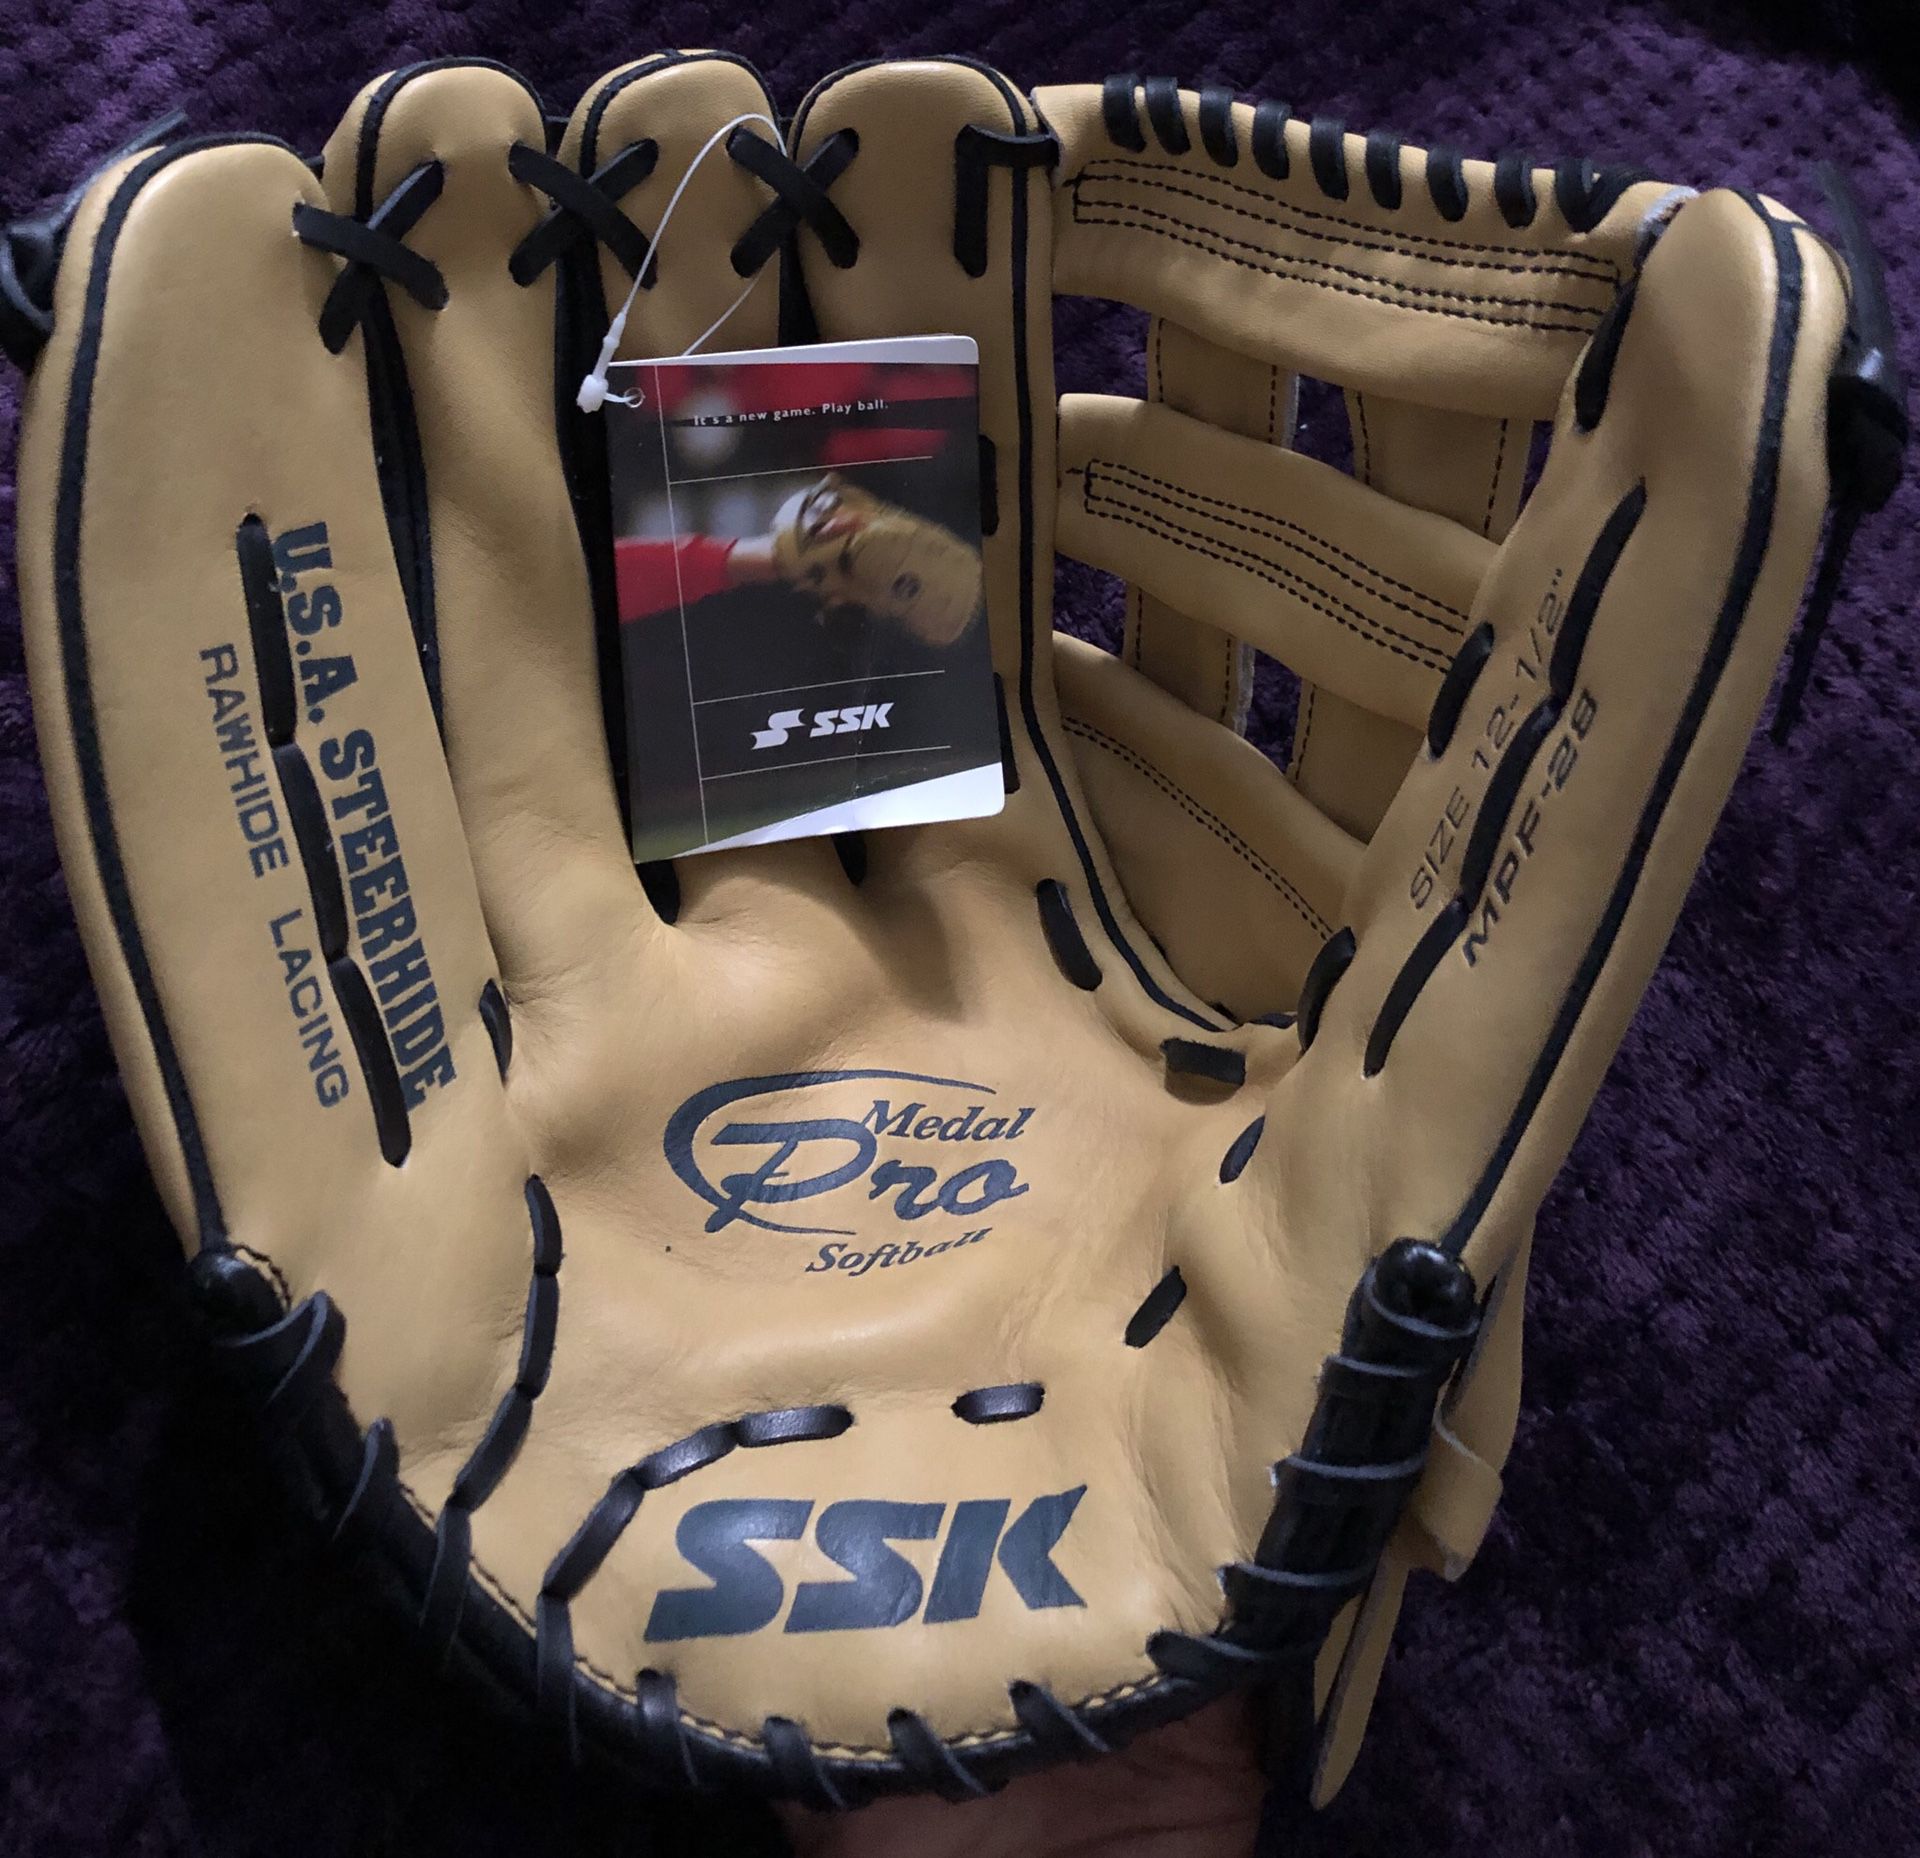 Left-Handed Throw SSK (Sasaki) Medal Pro Softball Glove